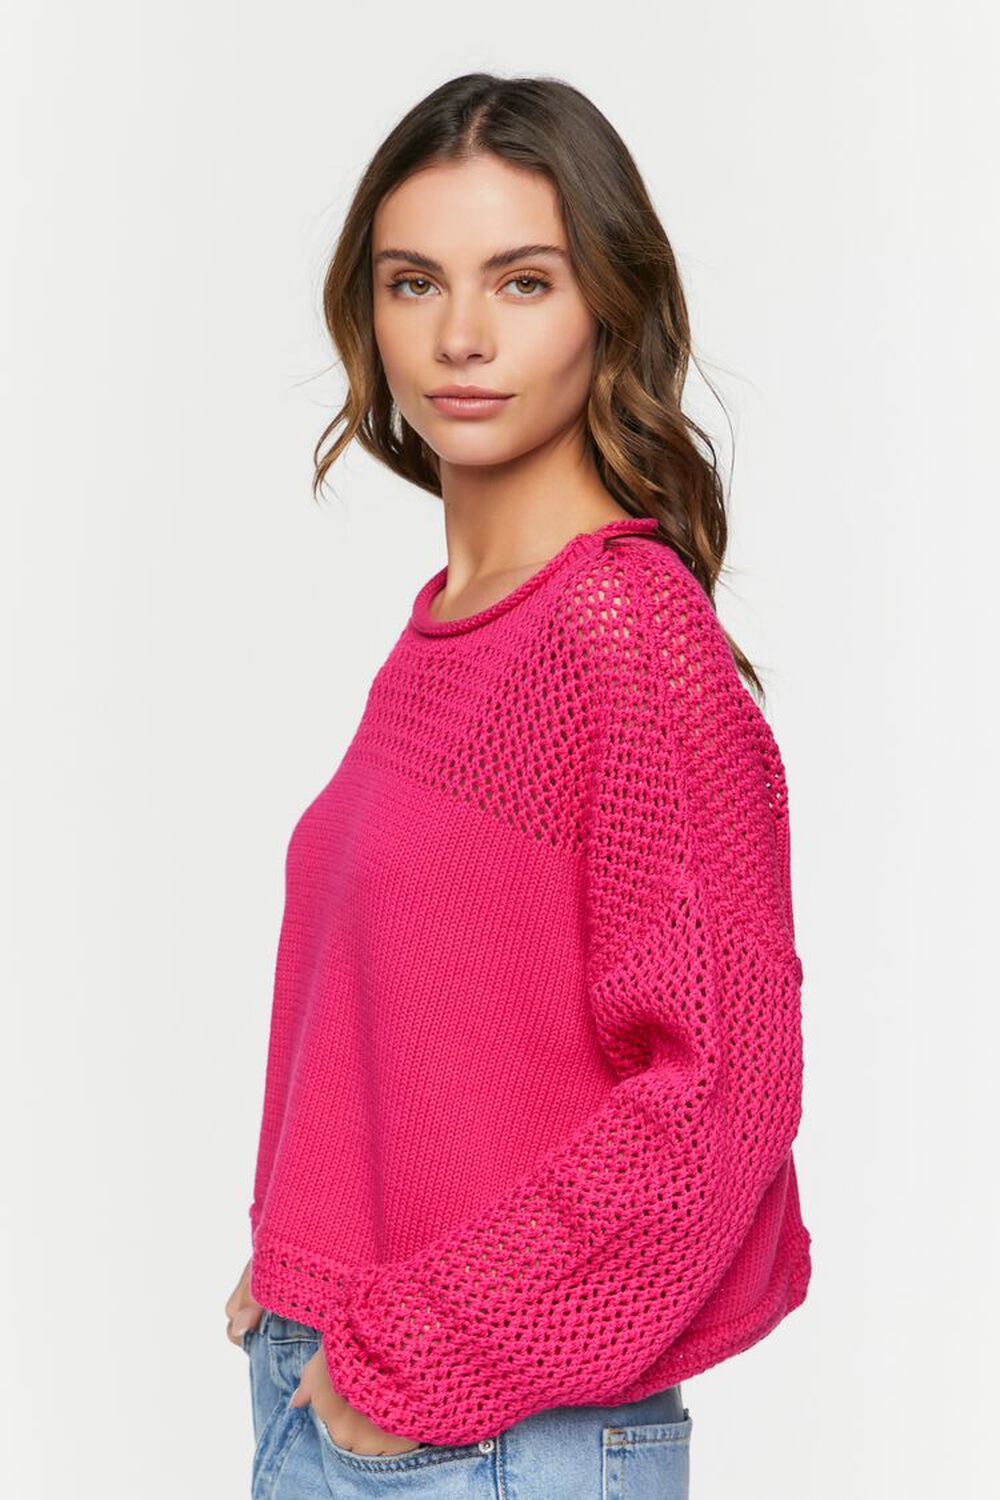 SHOCKING PINK Crochet Drop-Sleeve Sweater, image 2